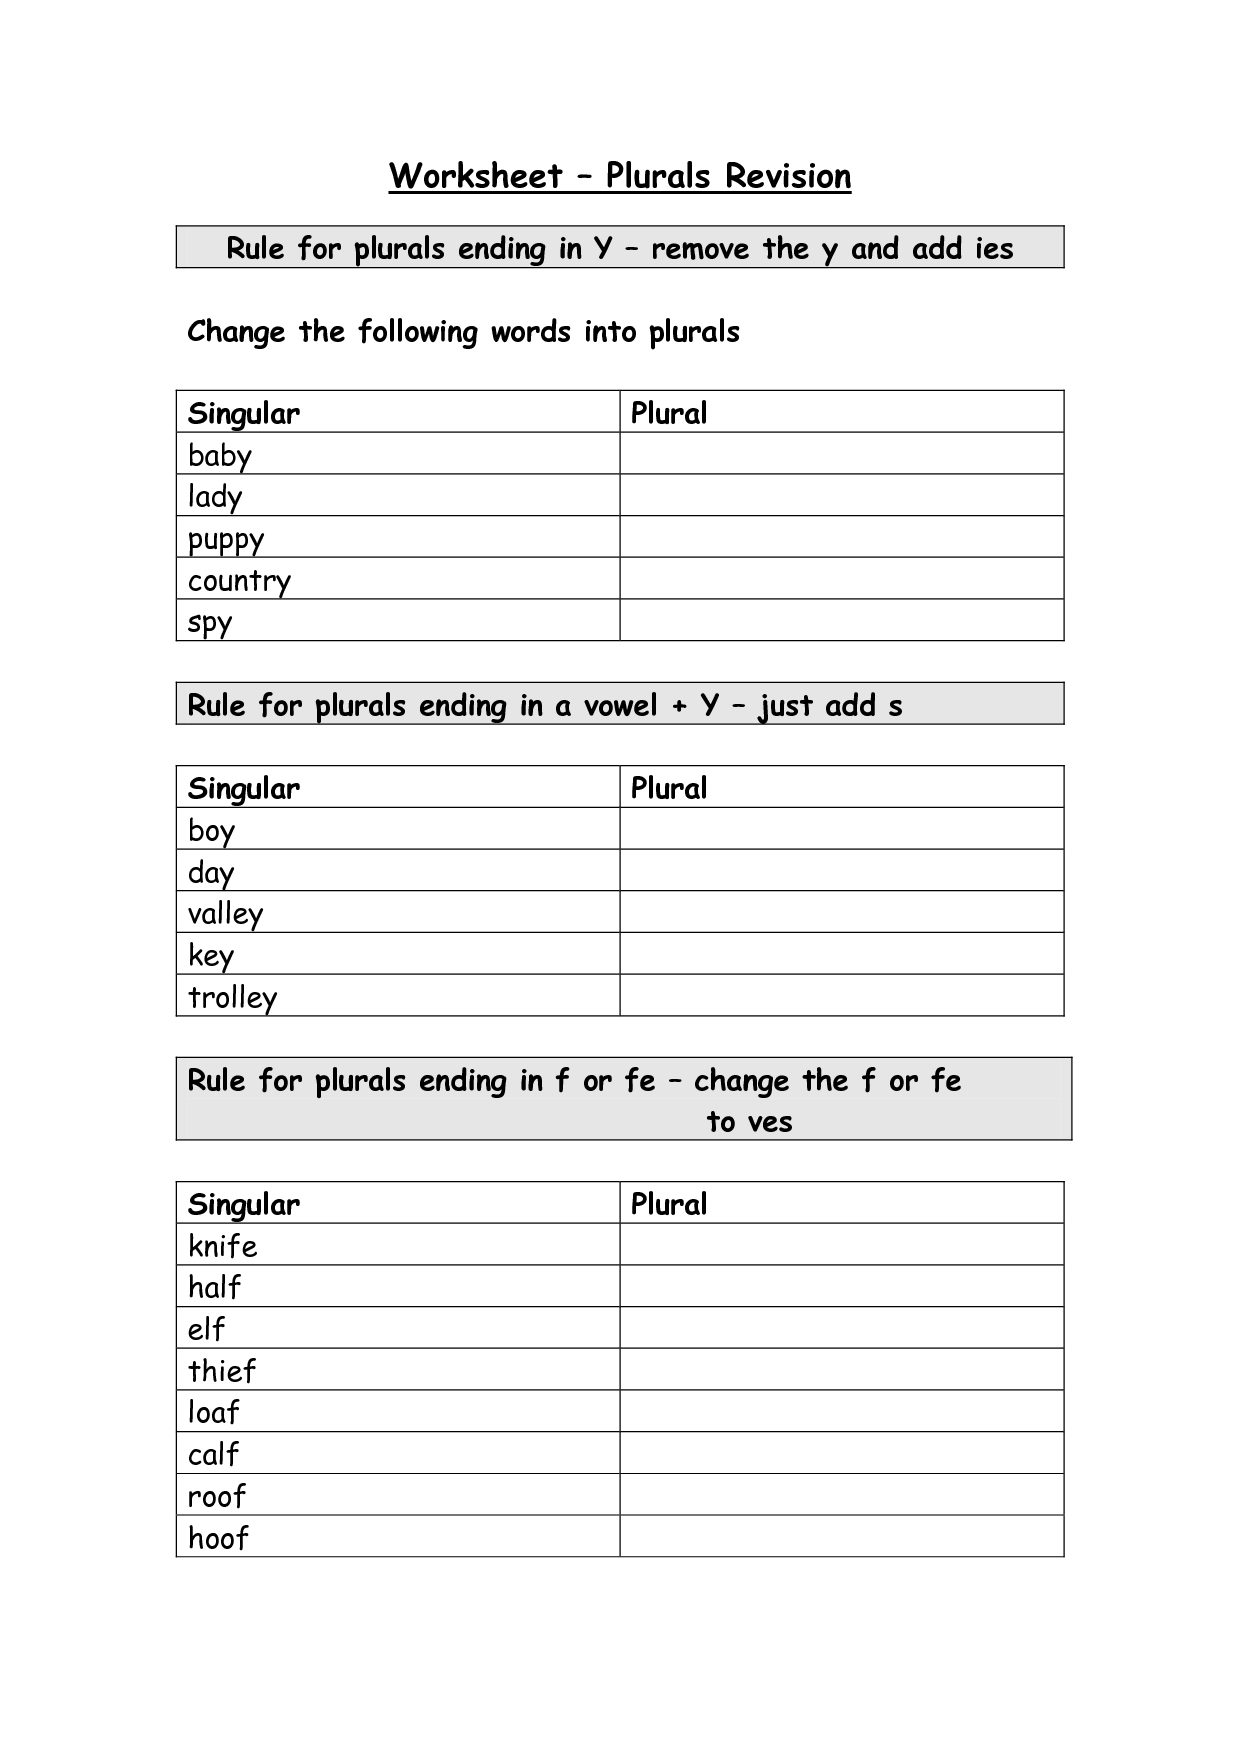 Irregular Plurals Worksheet Image